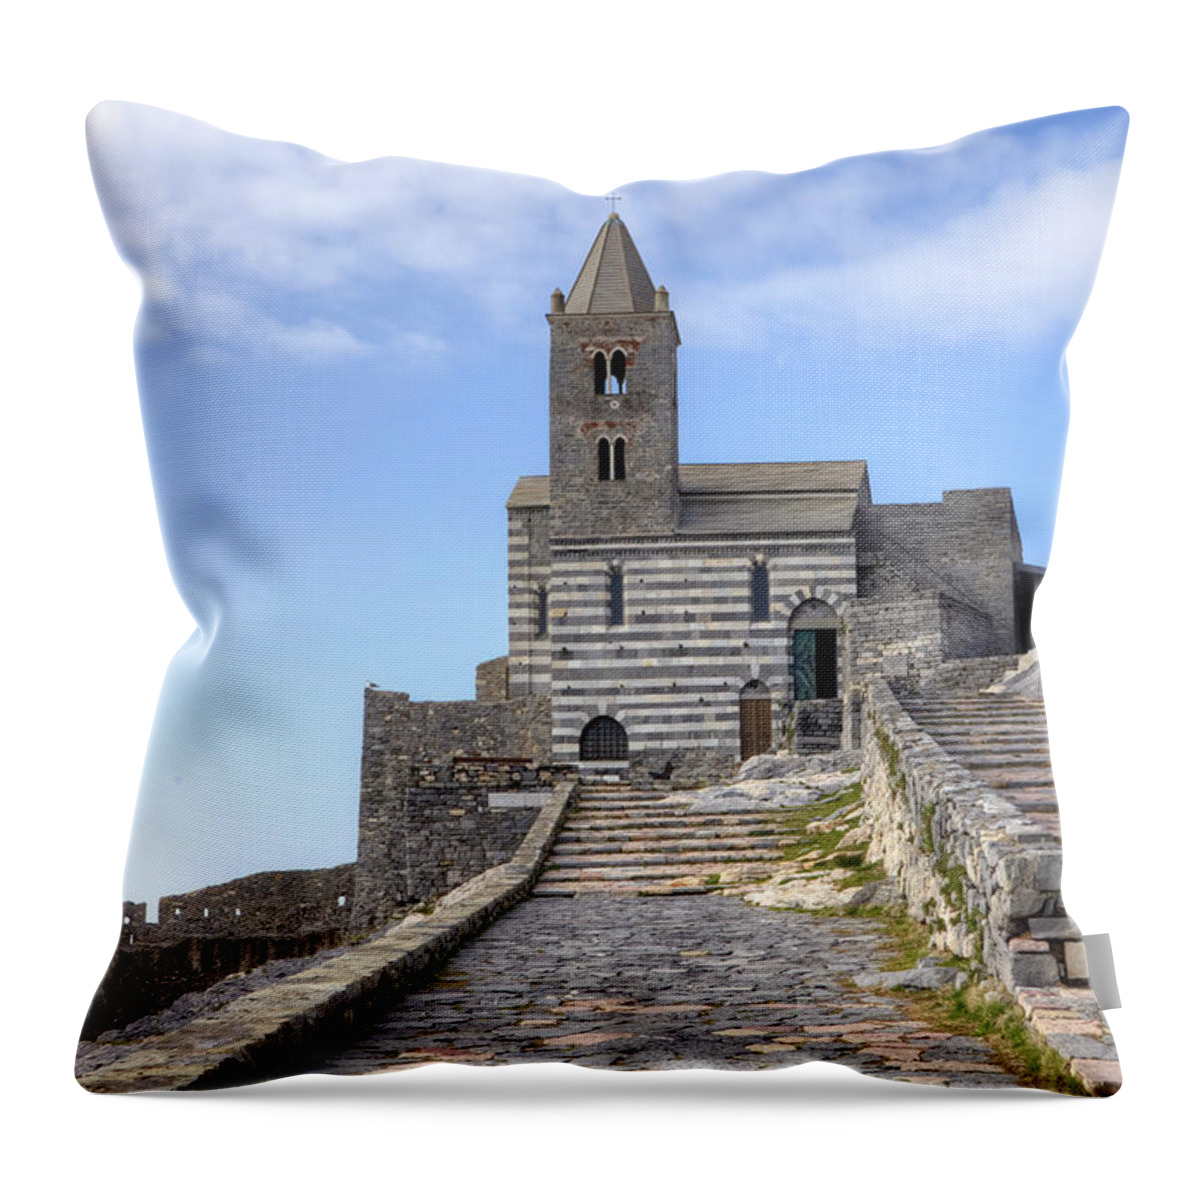 Porto Venere Throw Pillow featuring the photograph Porto Venere #11 by Joana Kruse